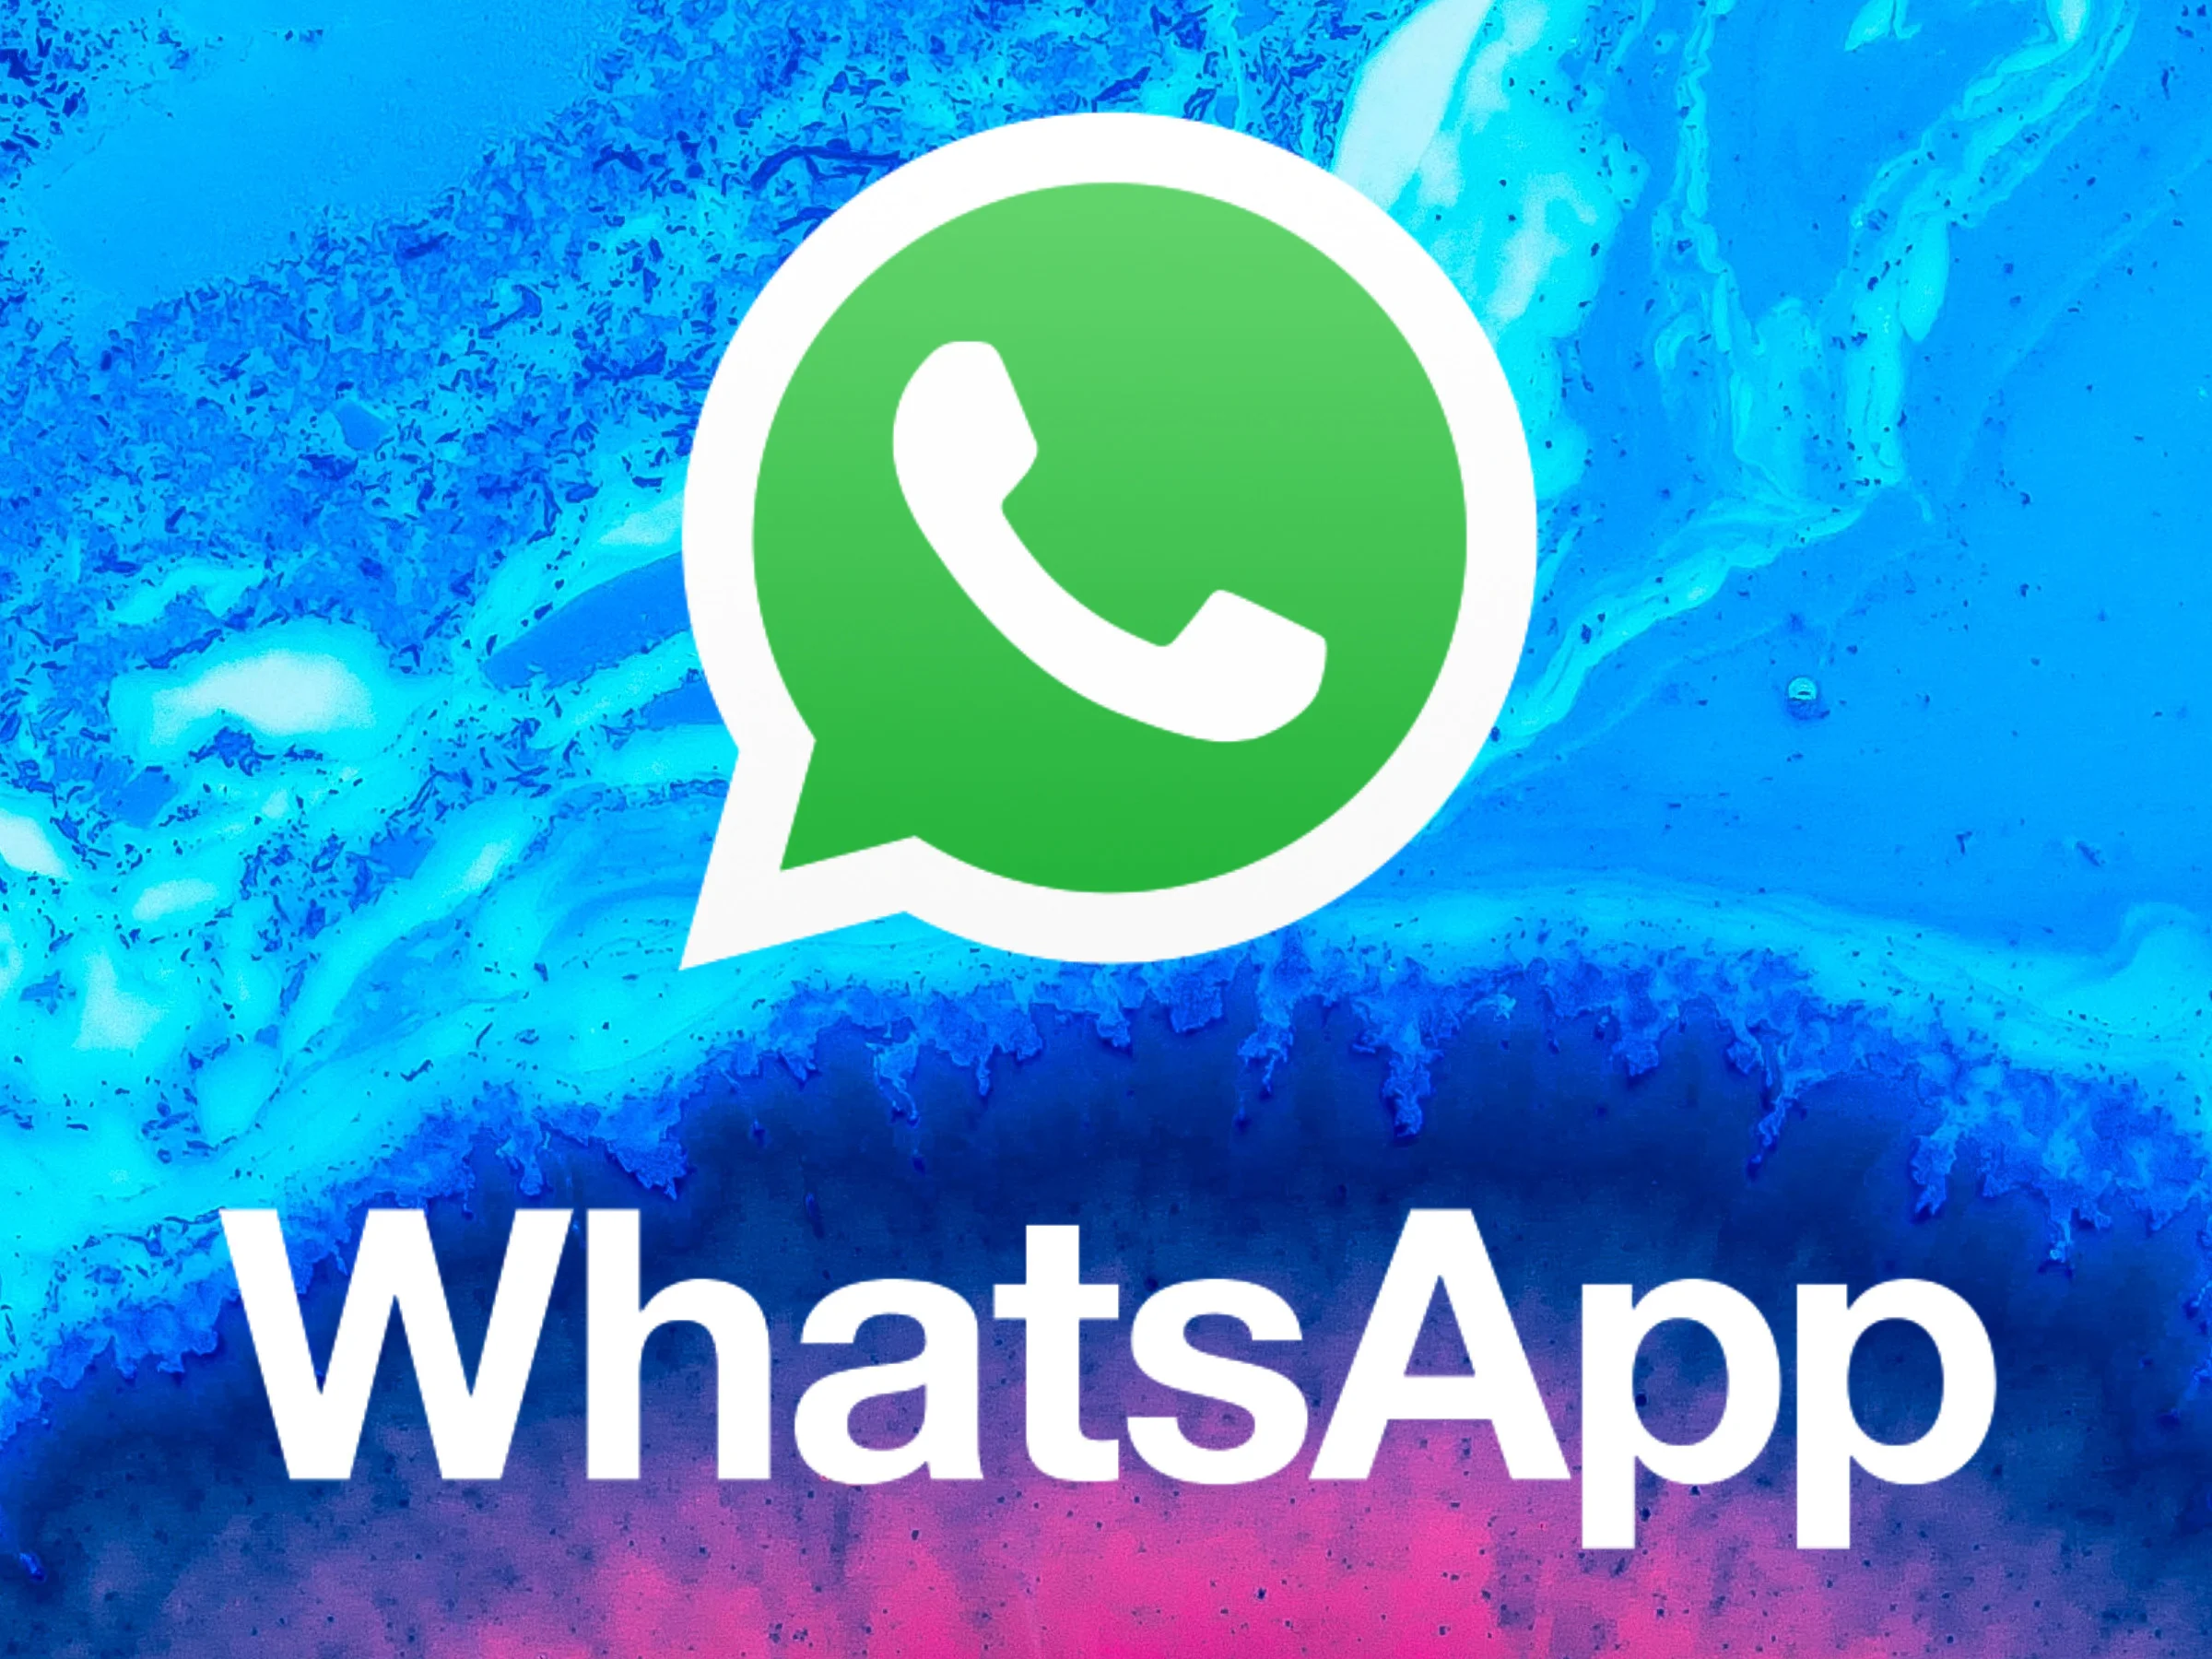 WhatsApp beta UWP 2.2205.2.0: что нового?